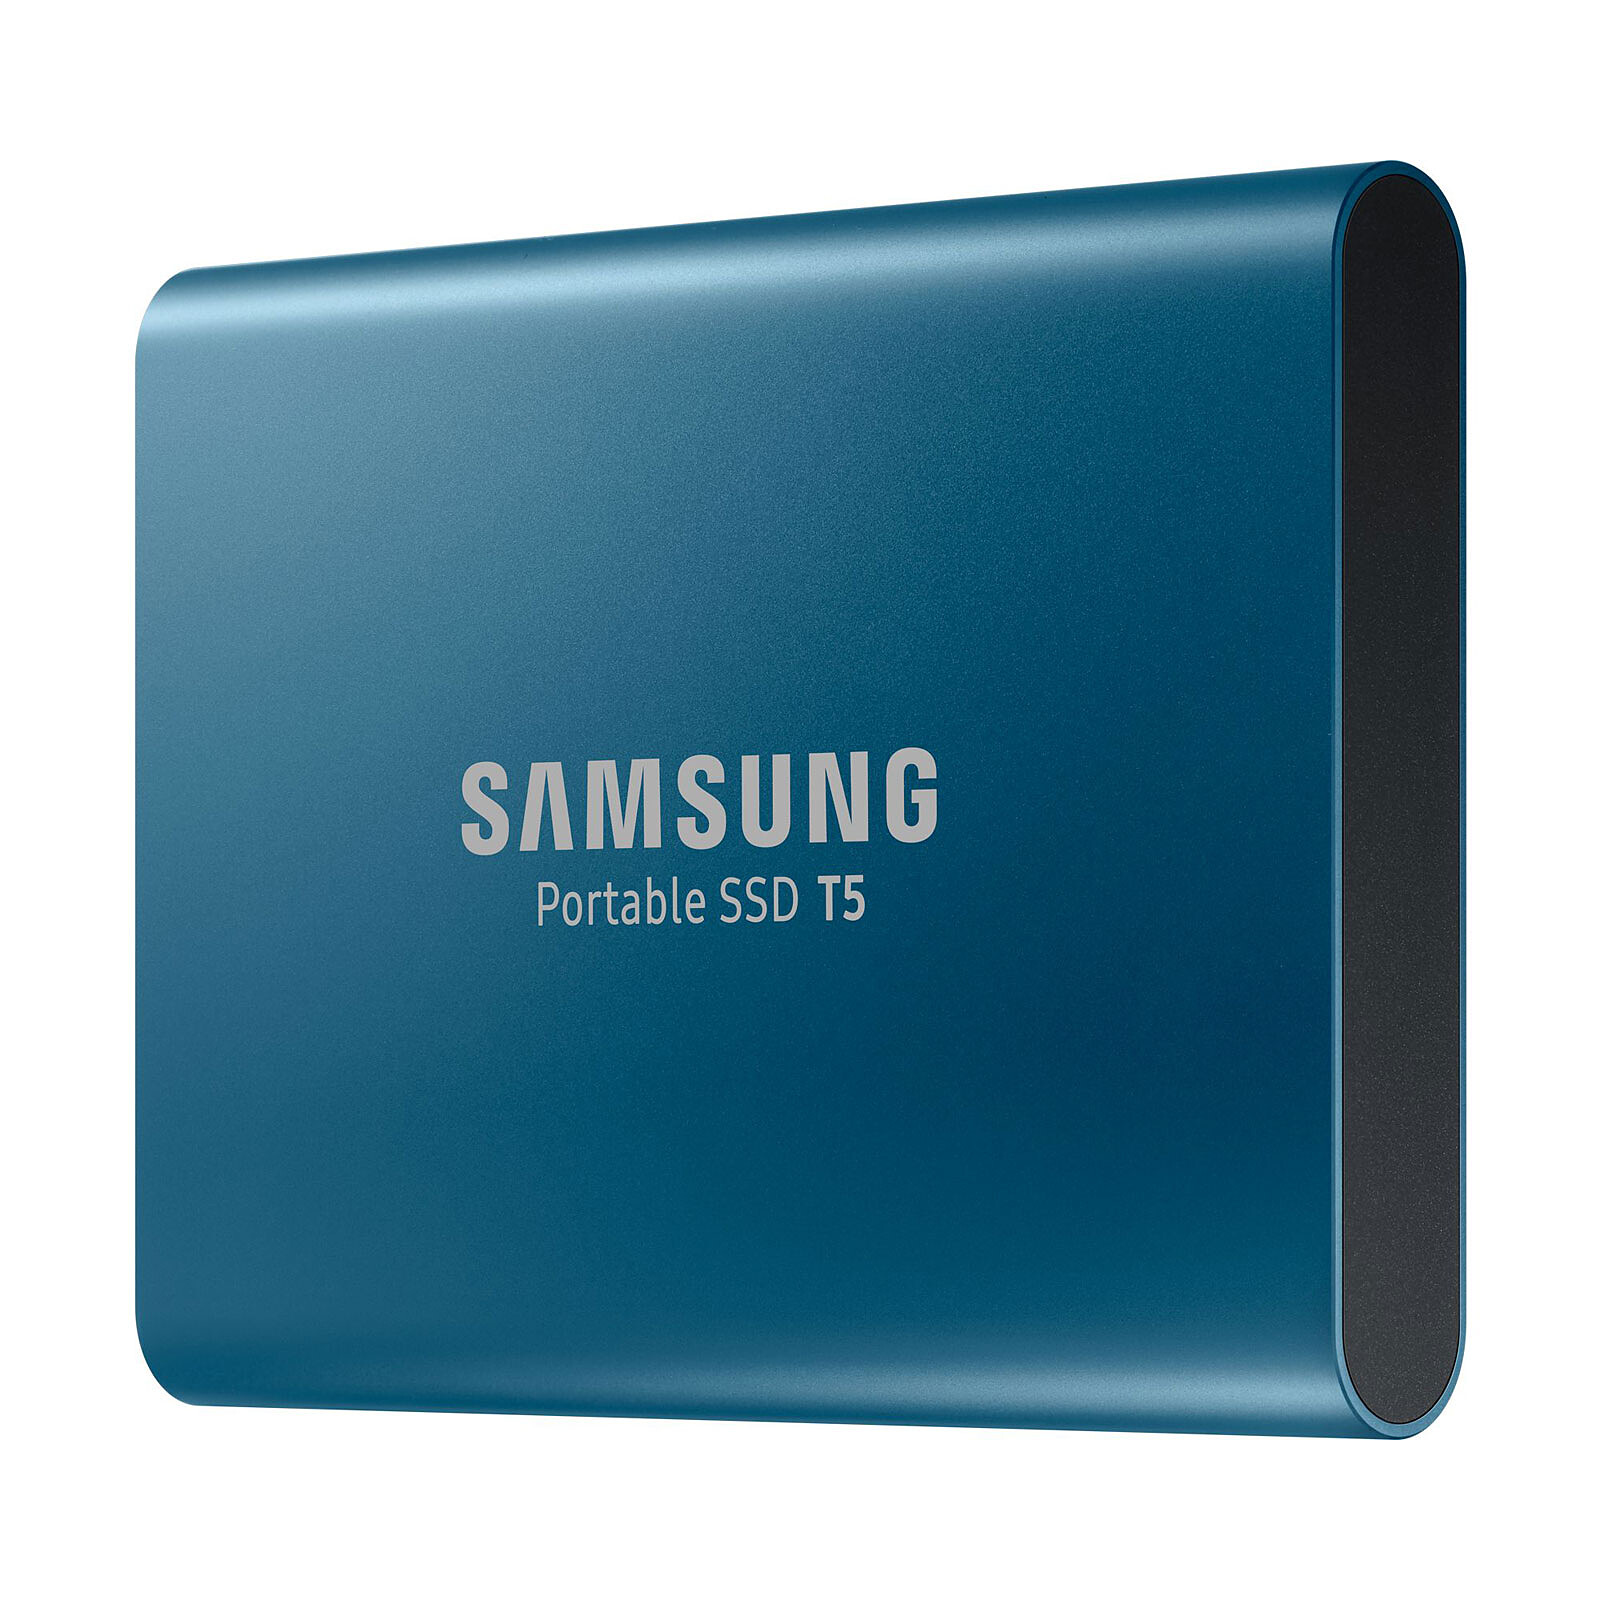 Samsung SSD Portable T5 500GB - External hard drive - LDLC 3-year warranty